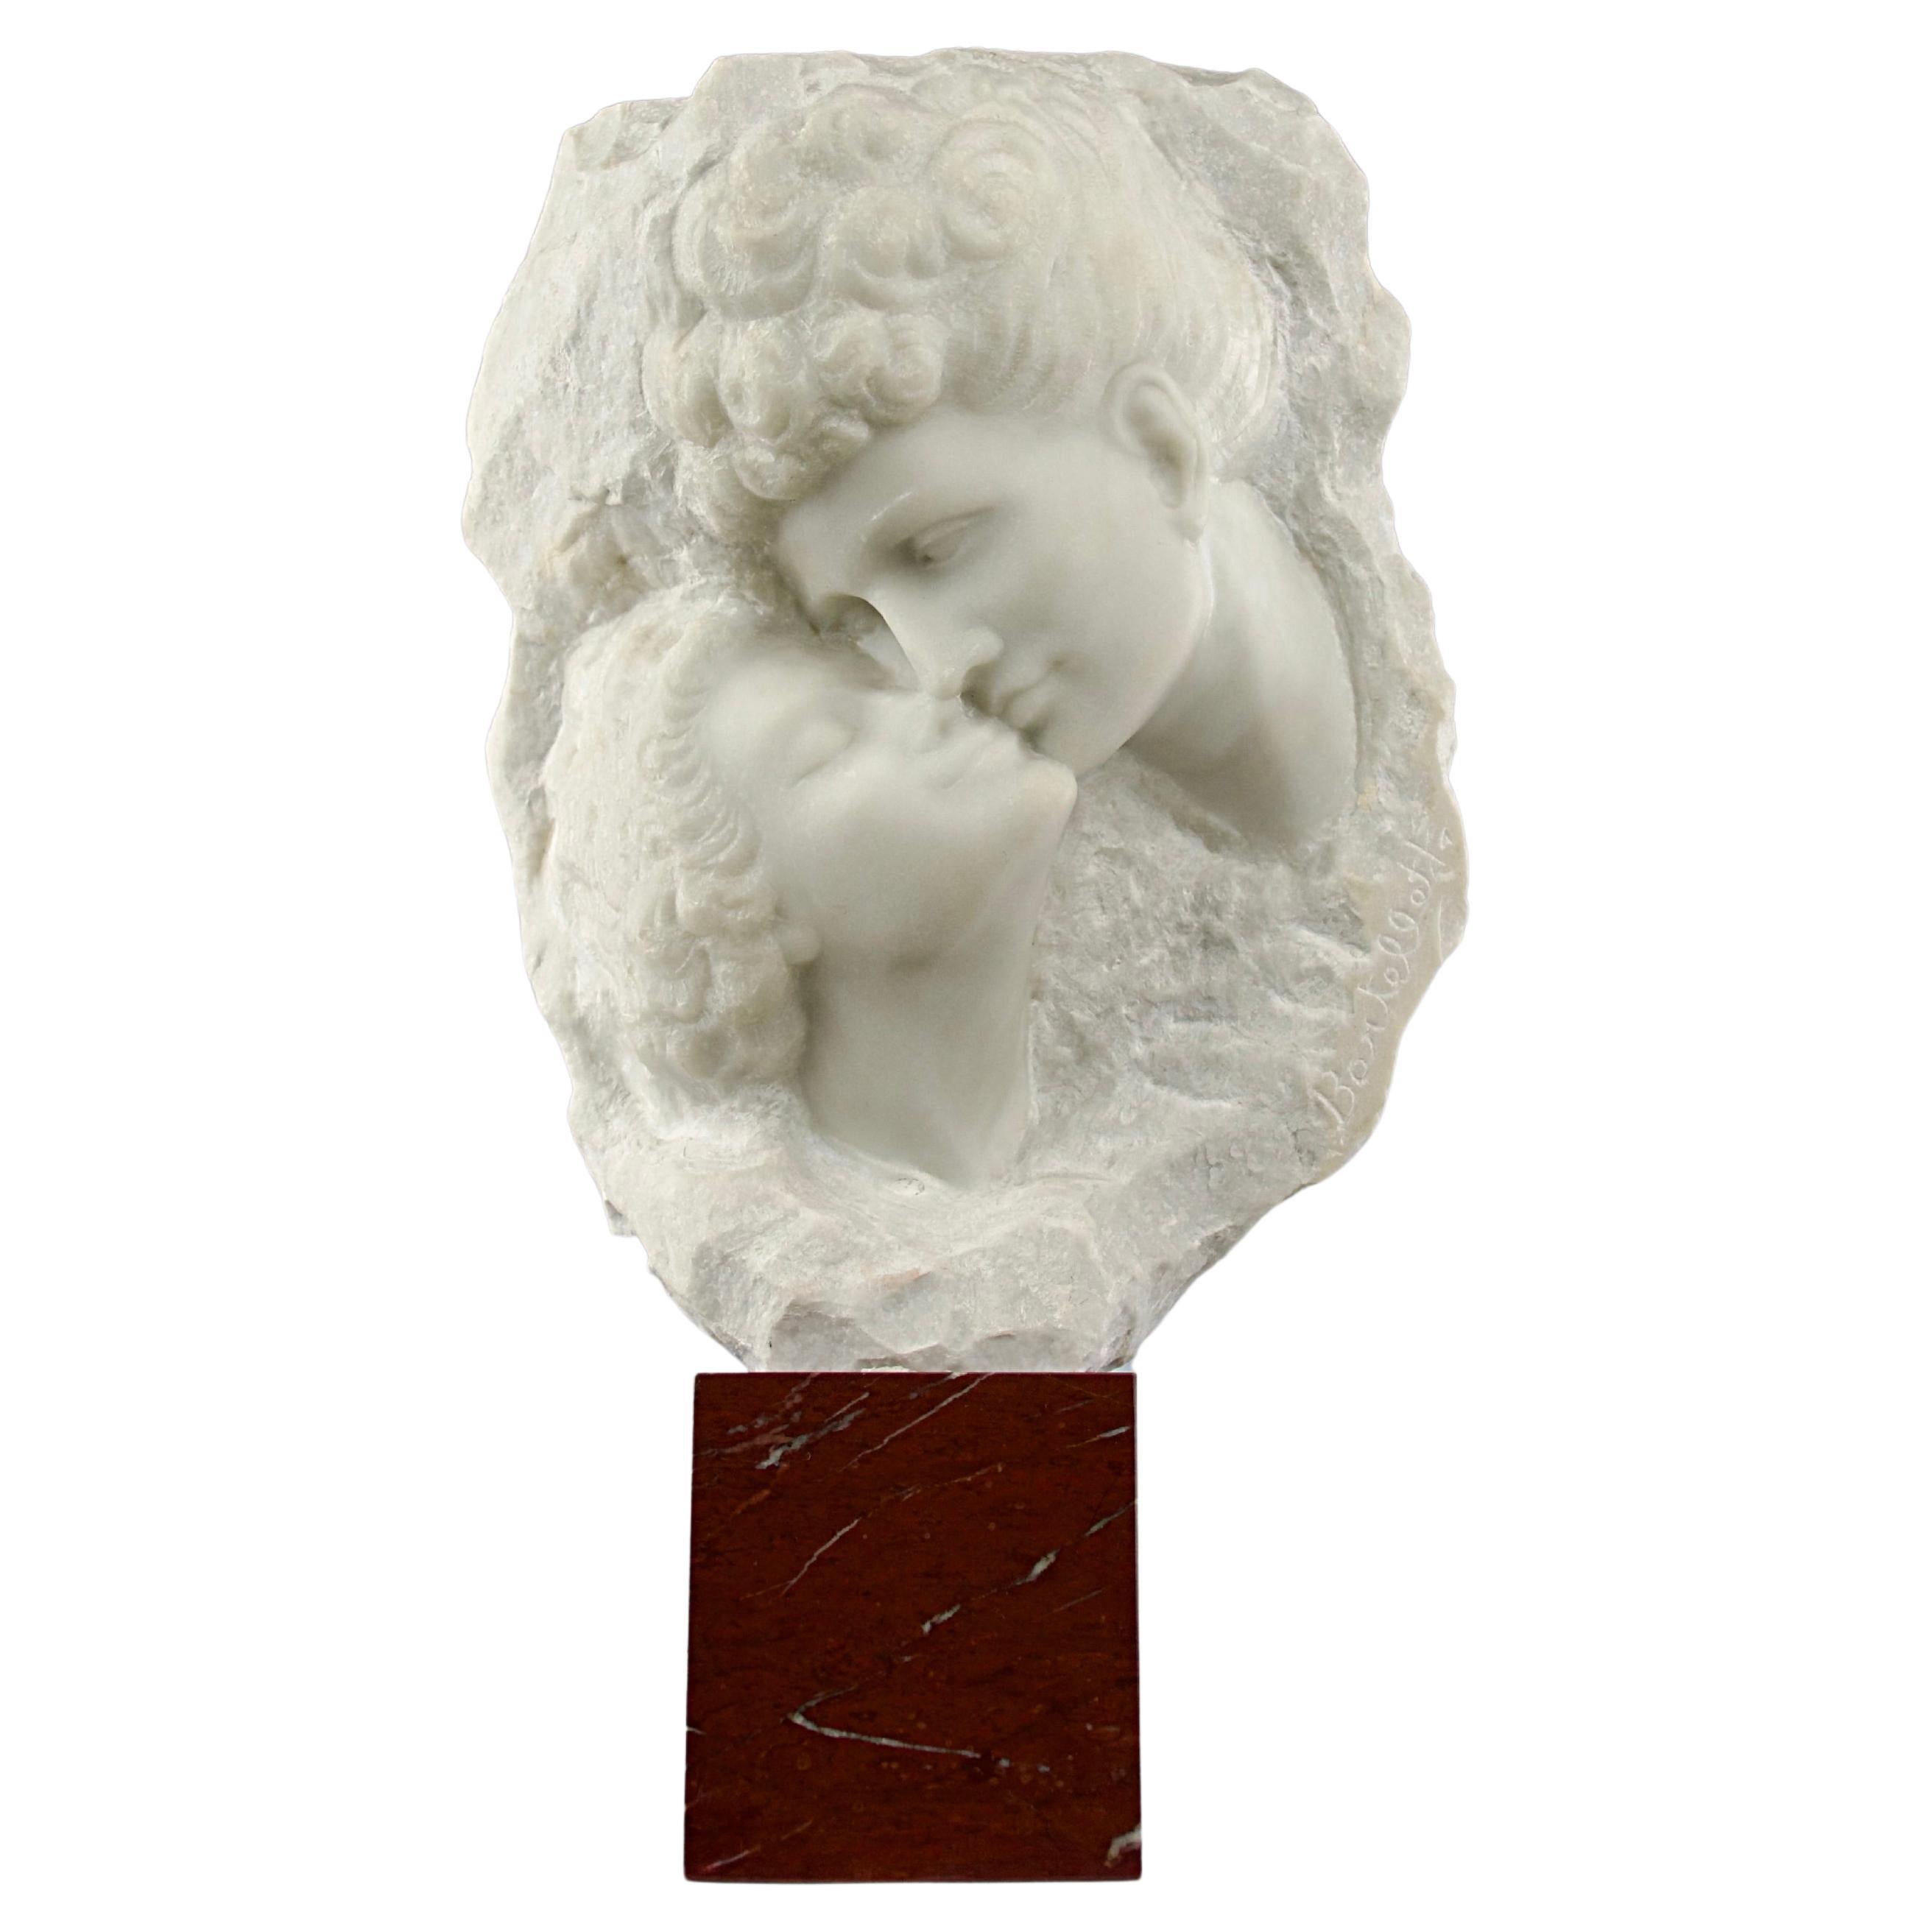 Aldo Bartelletti, "The Kiss", Marble Sculpture, Antique Italy 1900s, Romantic  For Sale